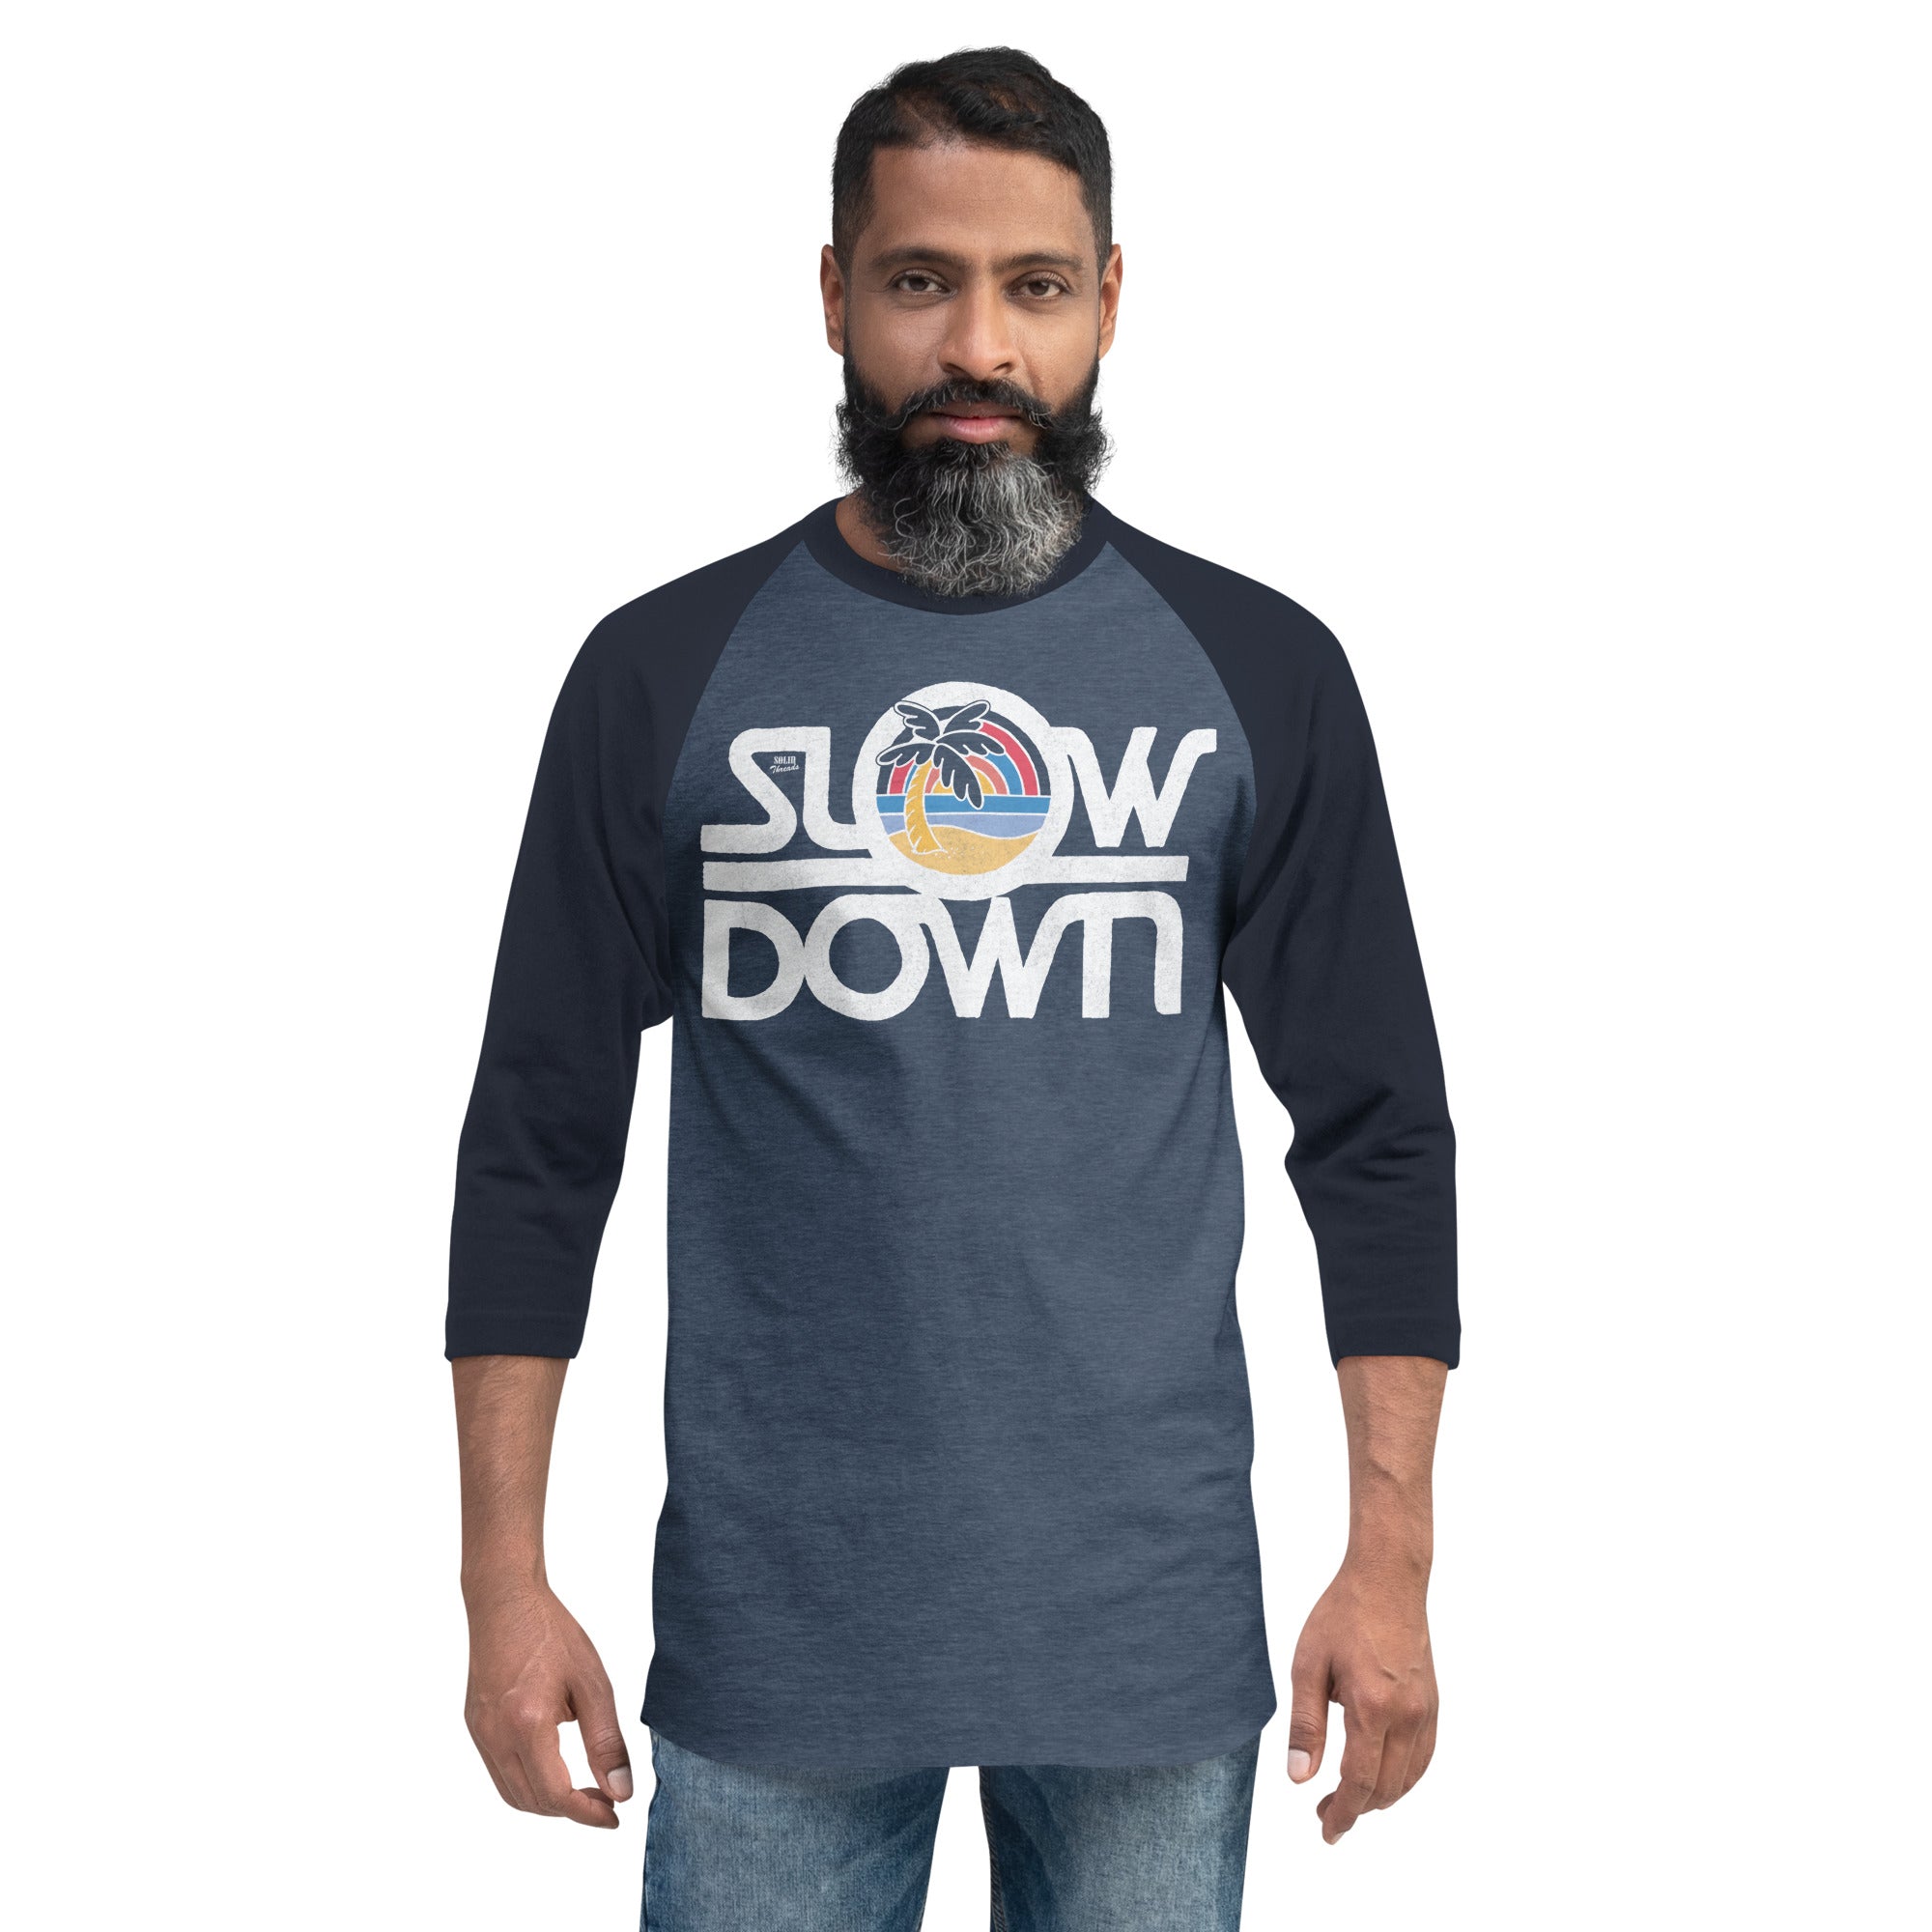 Slow Down Retro Graphic Raglan Tee | Cool Beach Vacation Baseball T-shirt on Male Model | Solid Threads